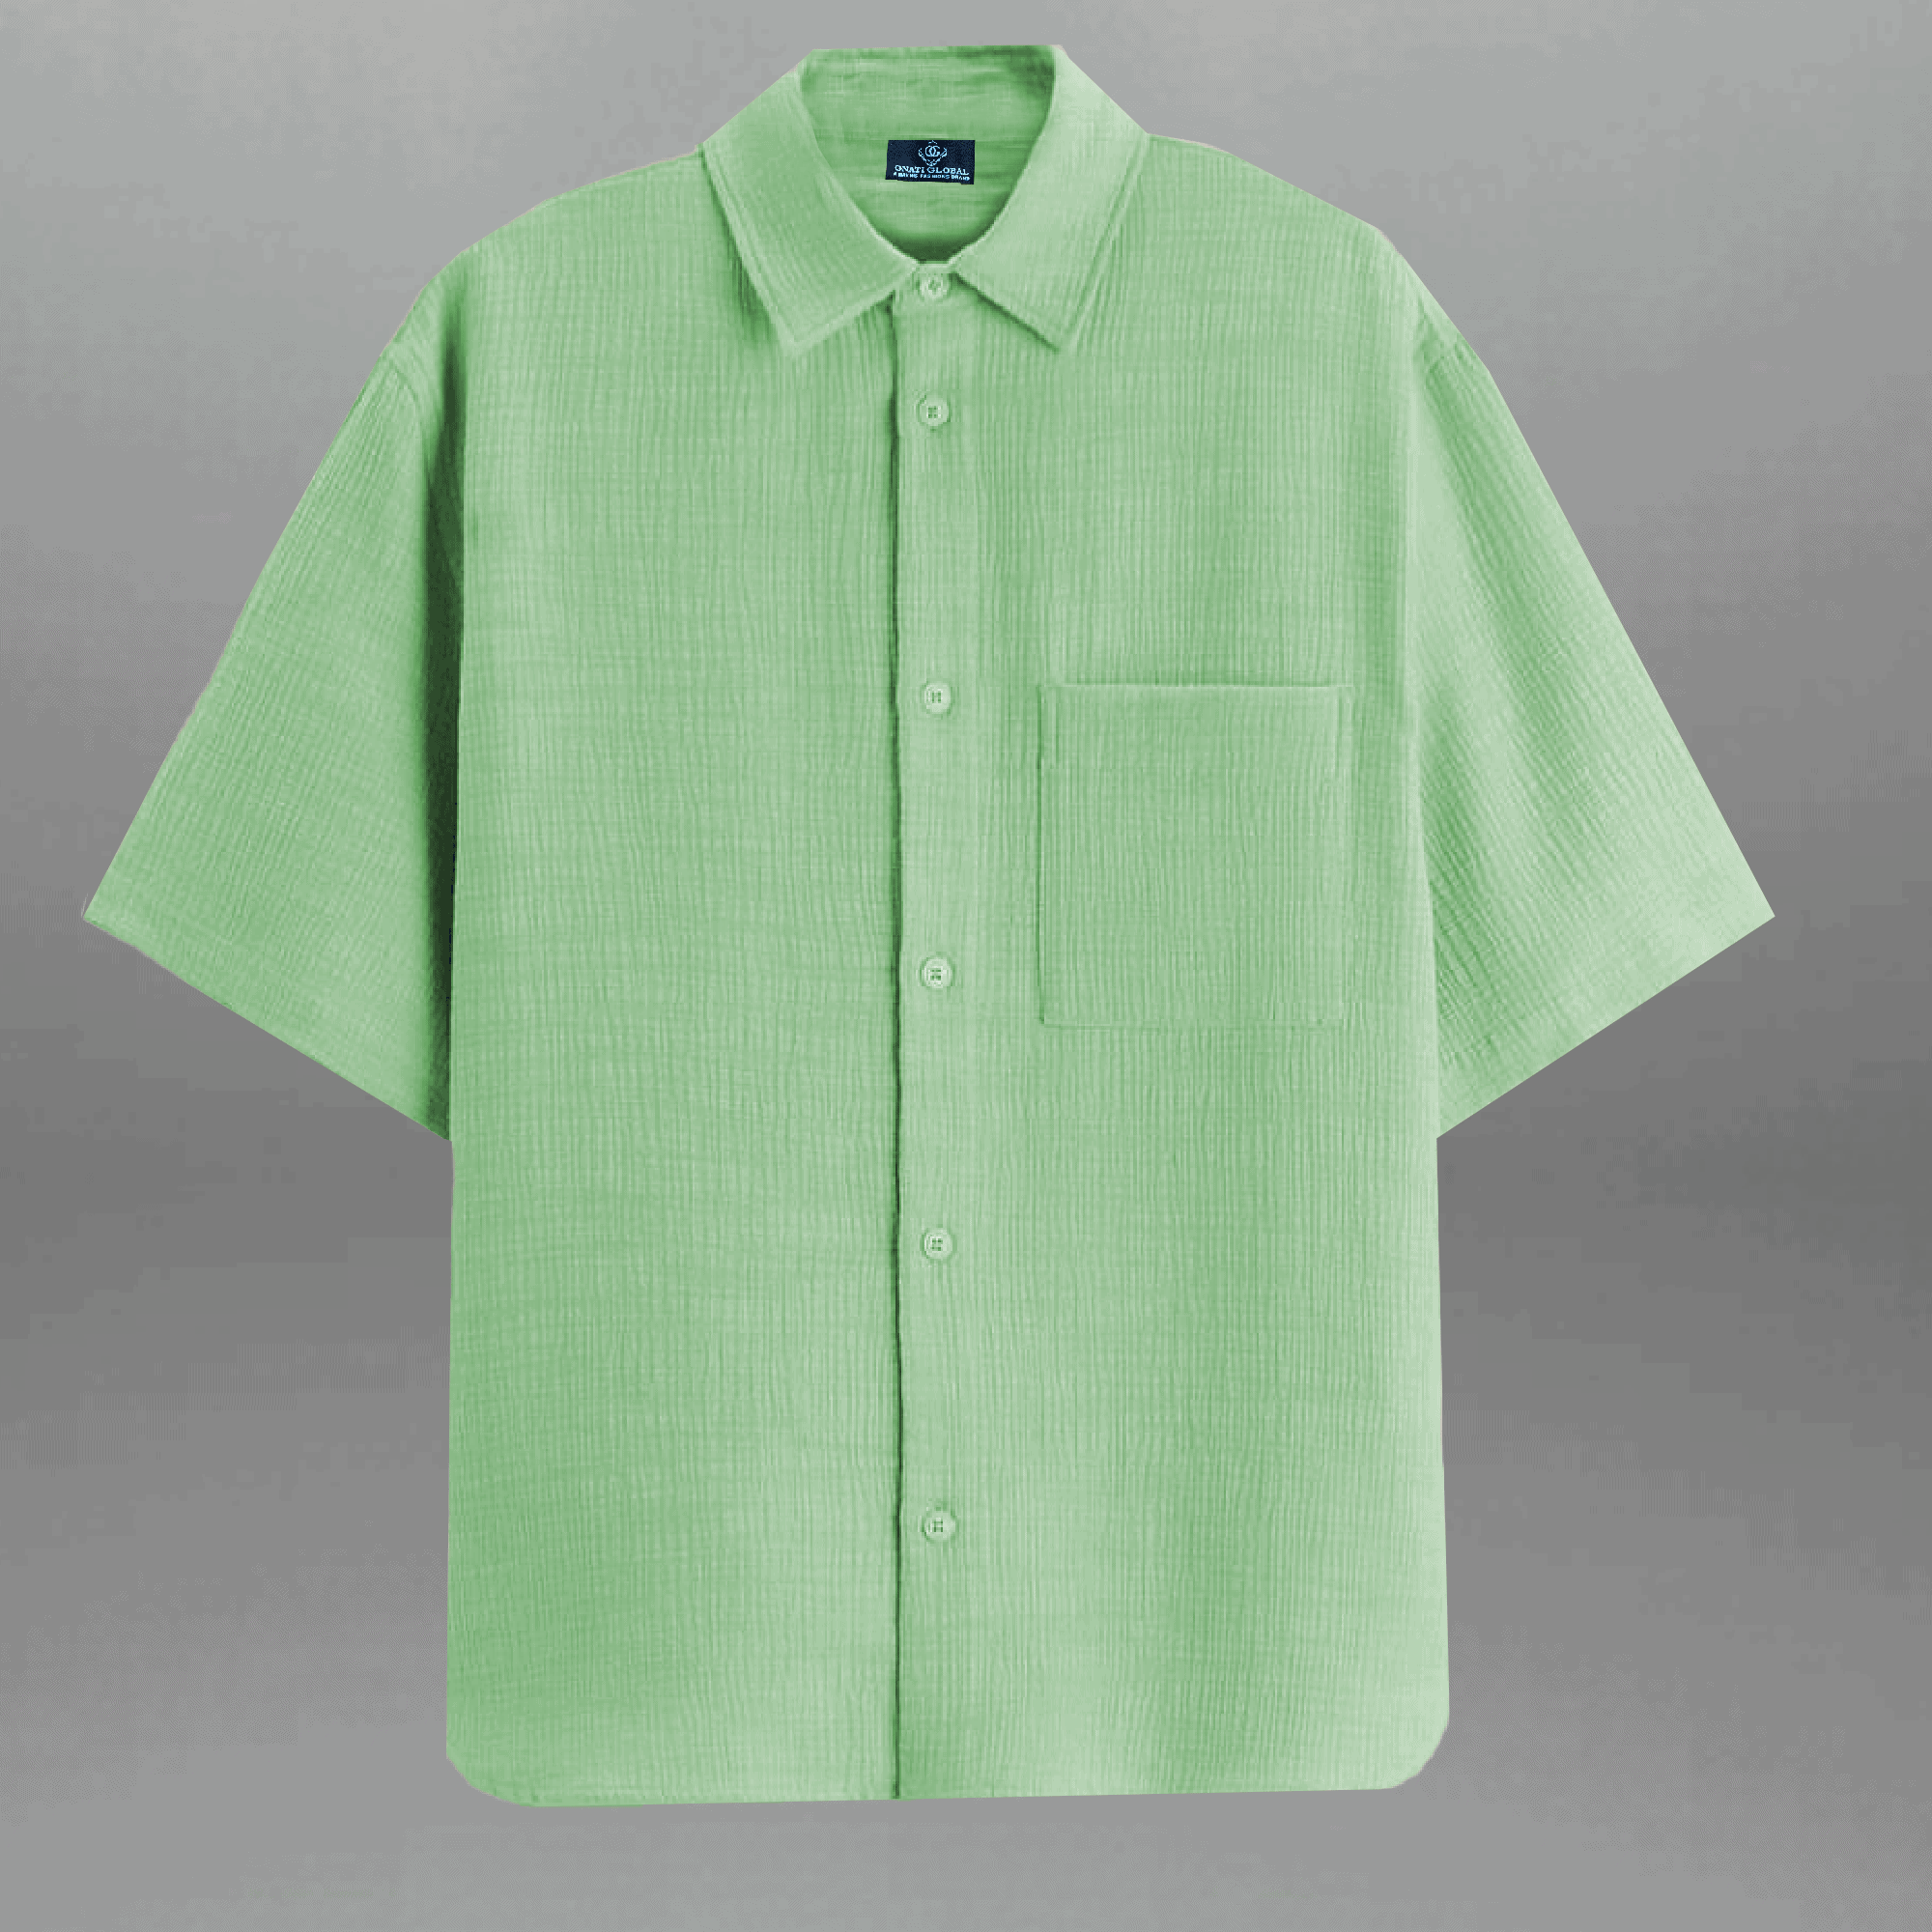 Men's Pista Green Textured Shirt with a Pocket-RMS050